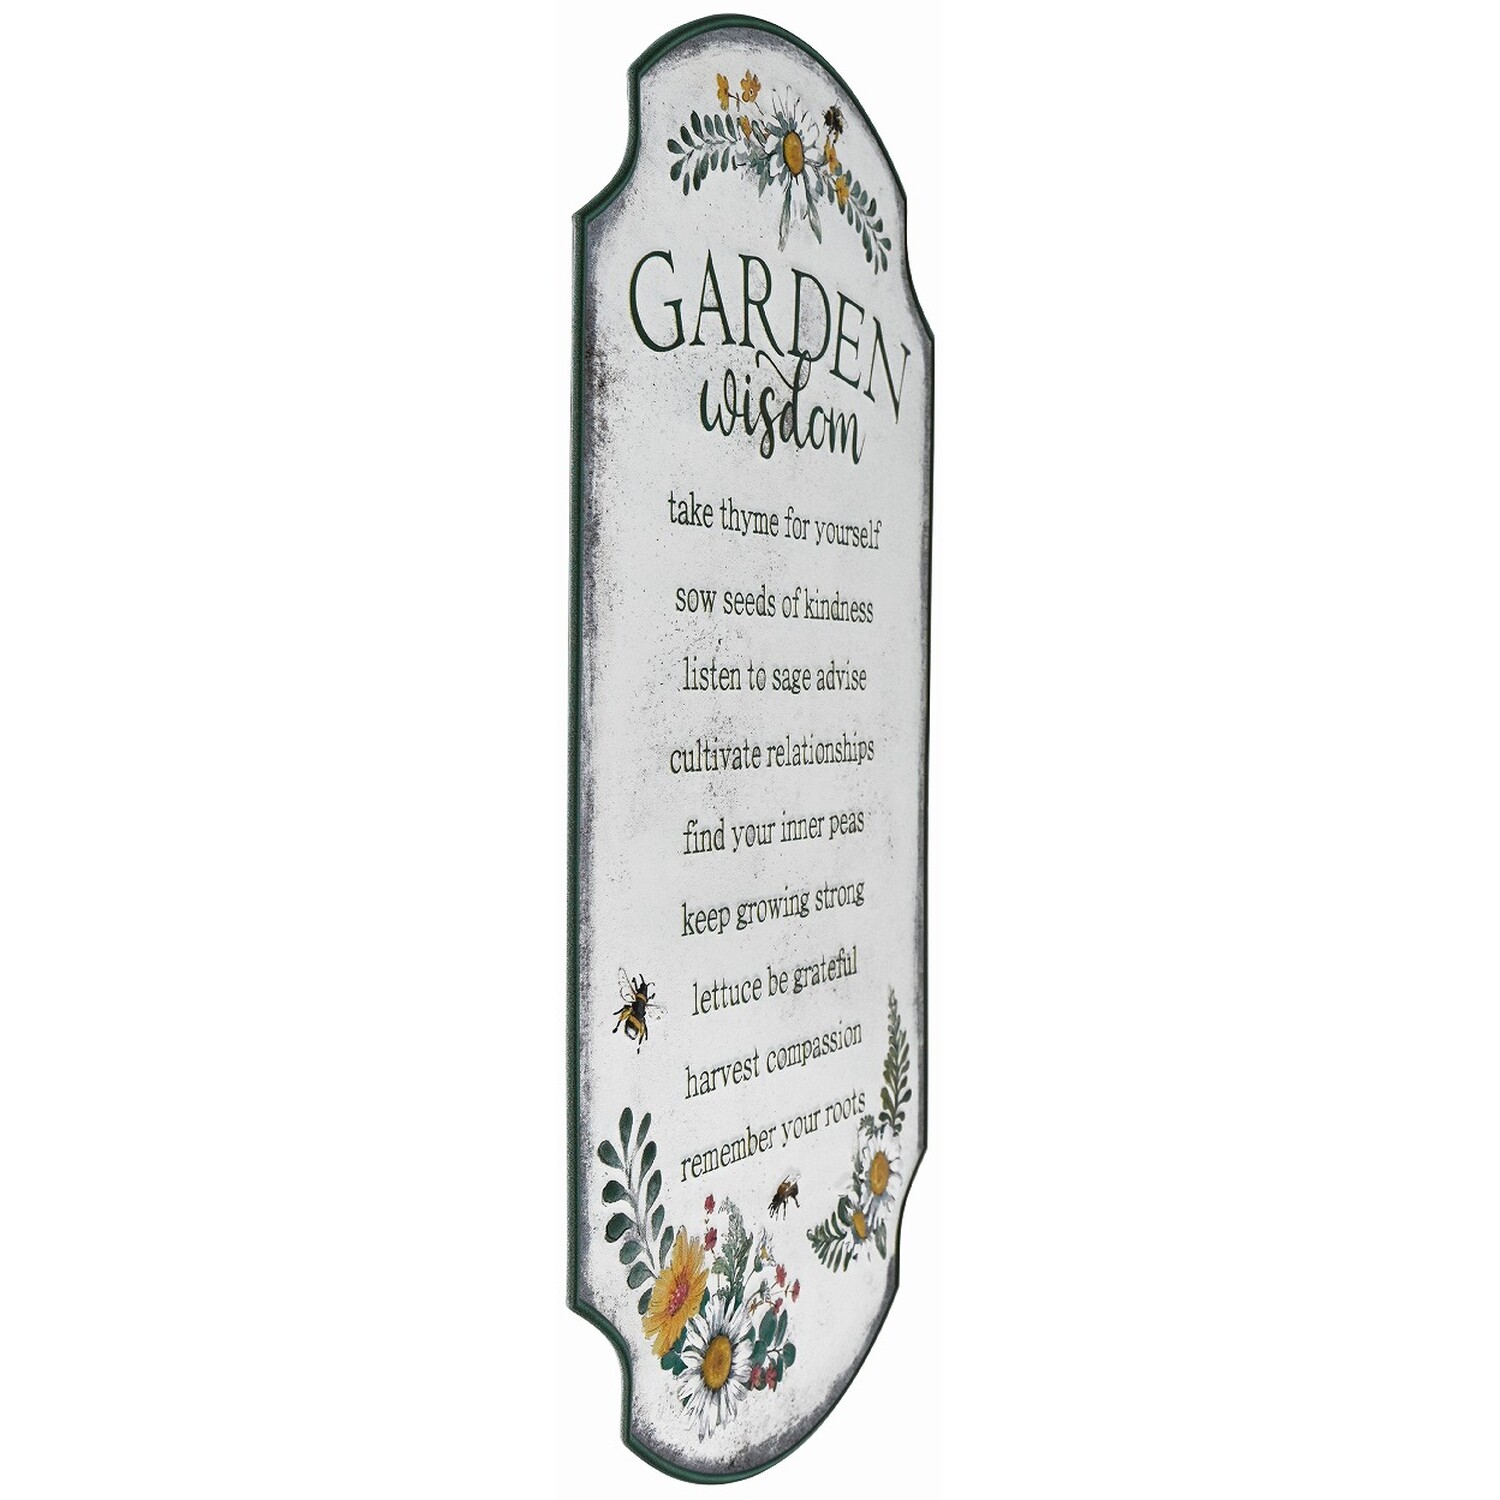 Garden Wisdom Metal Sign - White Image 2